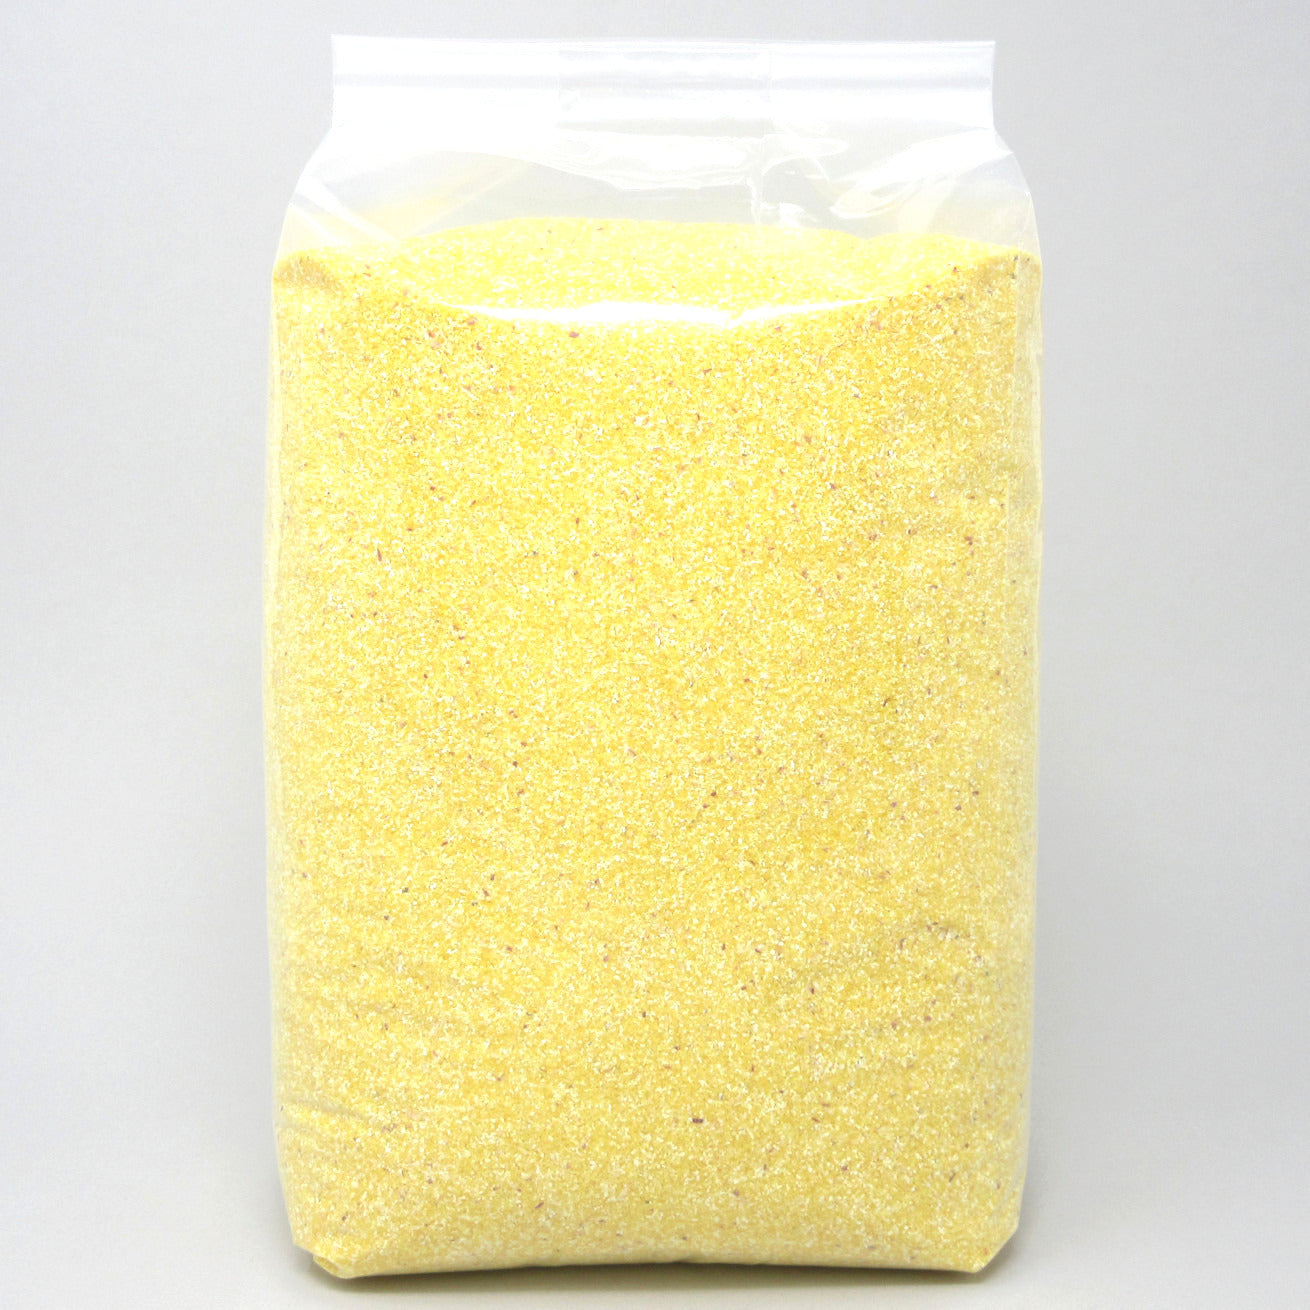 Flour Barrel product image - Cornmeal